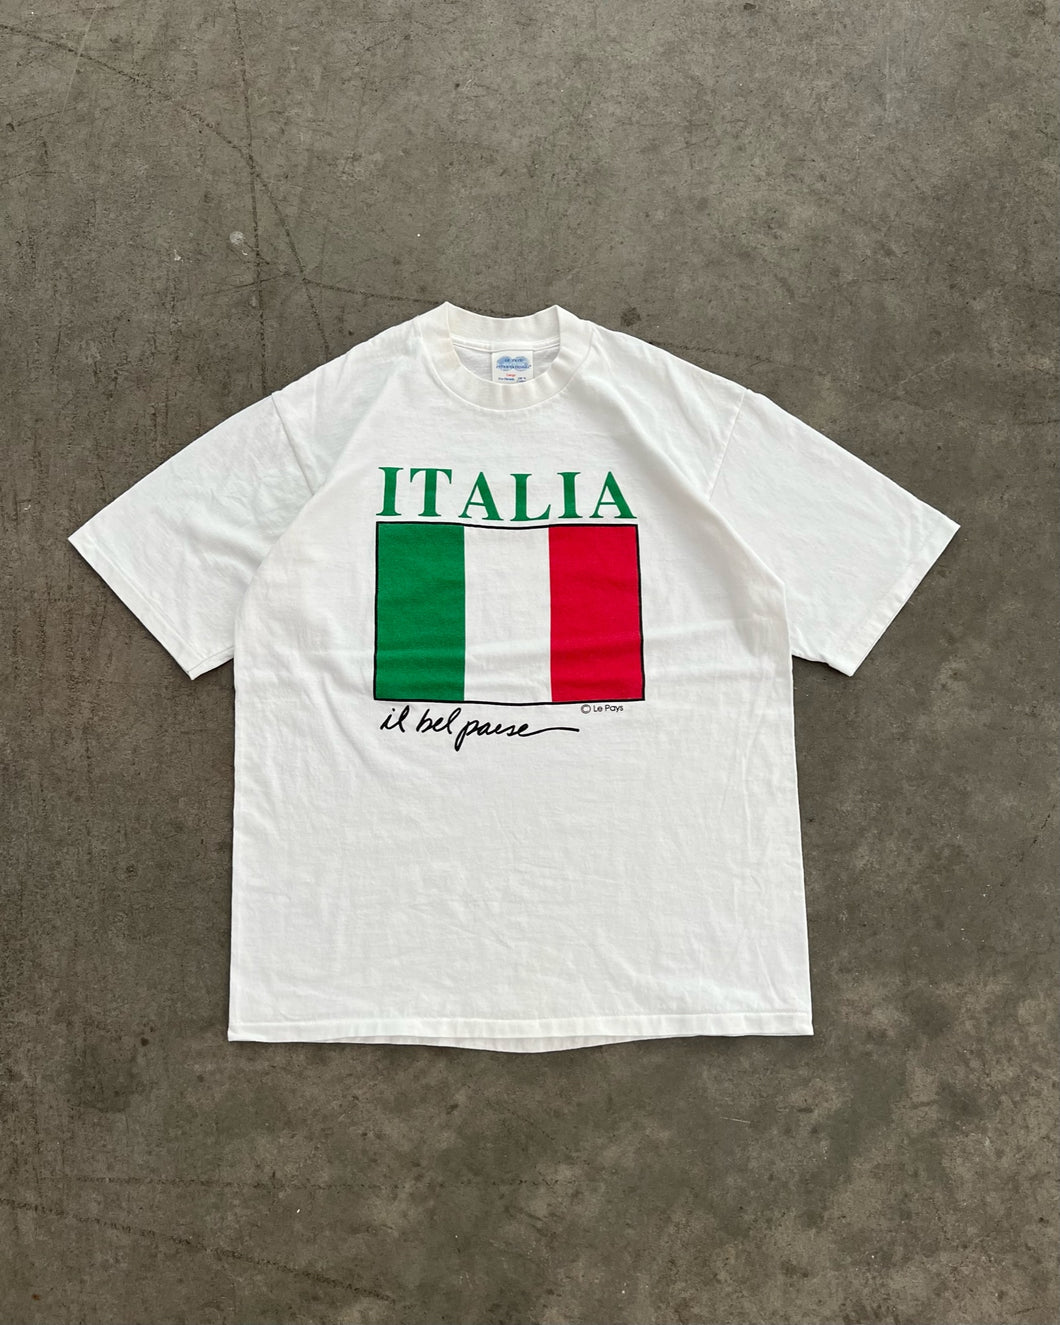 SINGLE STITCHED “ITALIA” WHITE TEE - 1990S